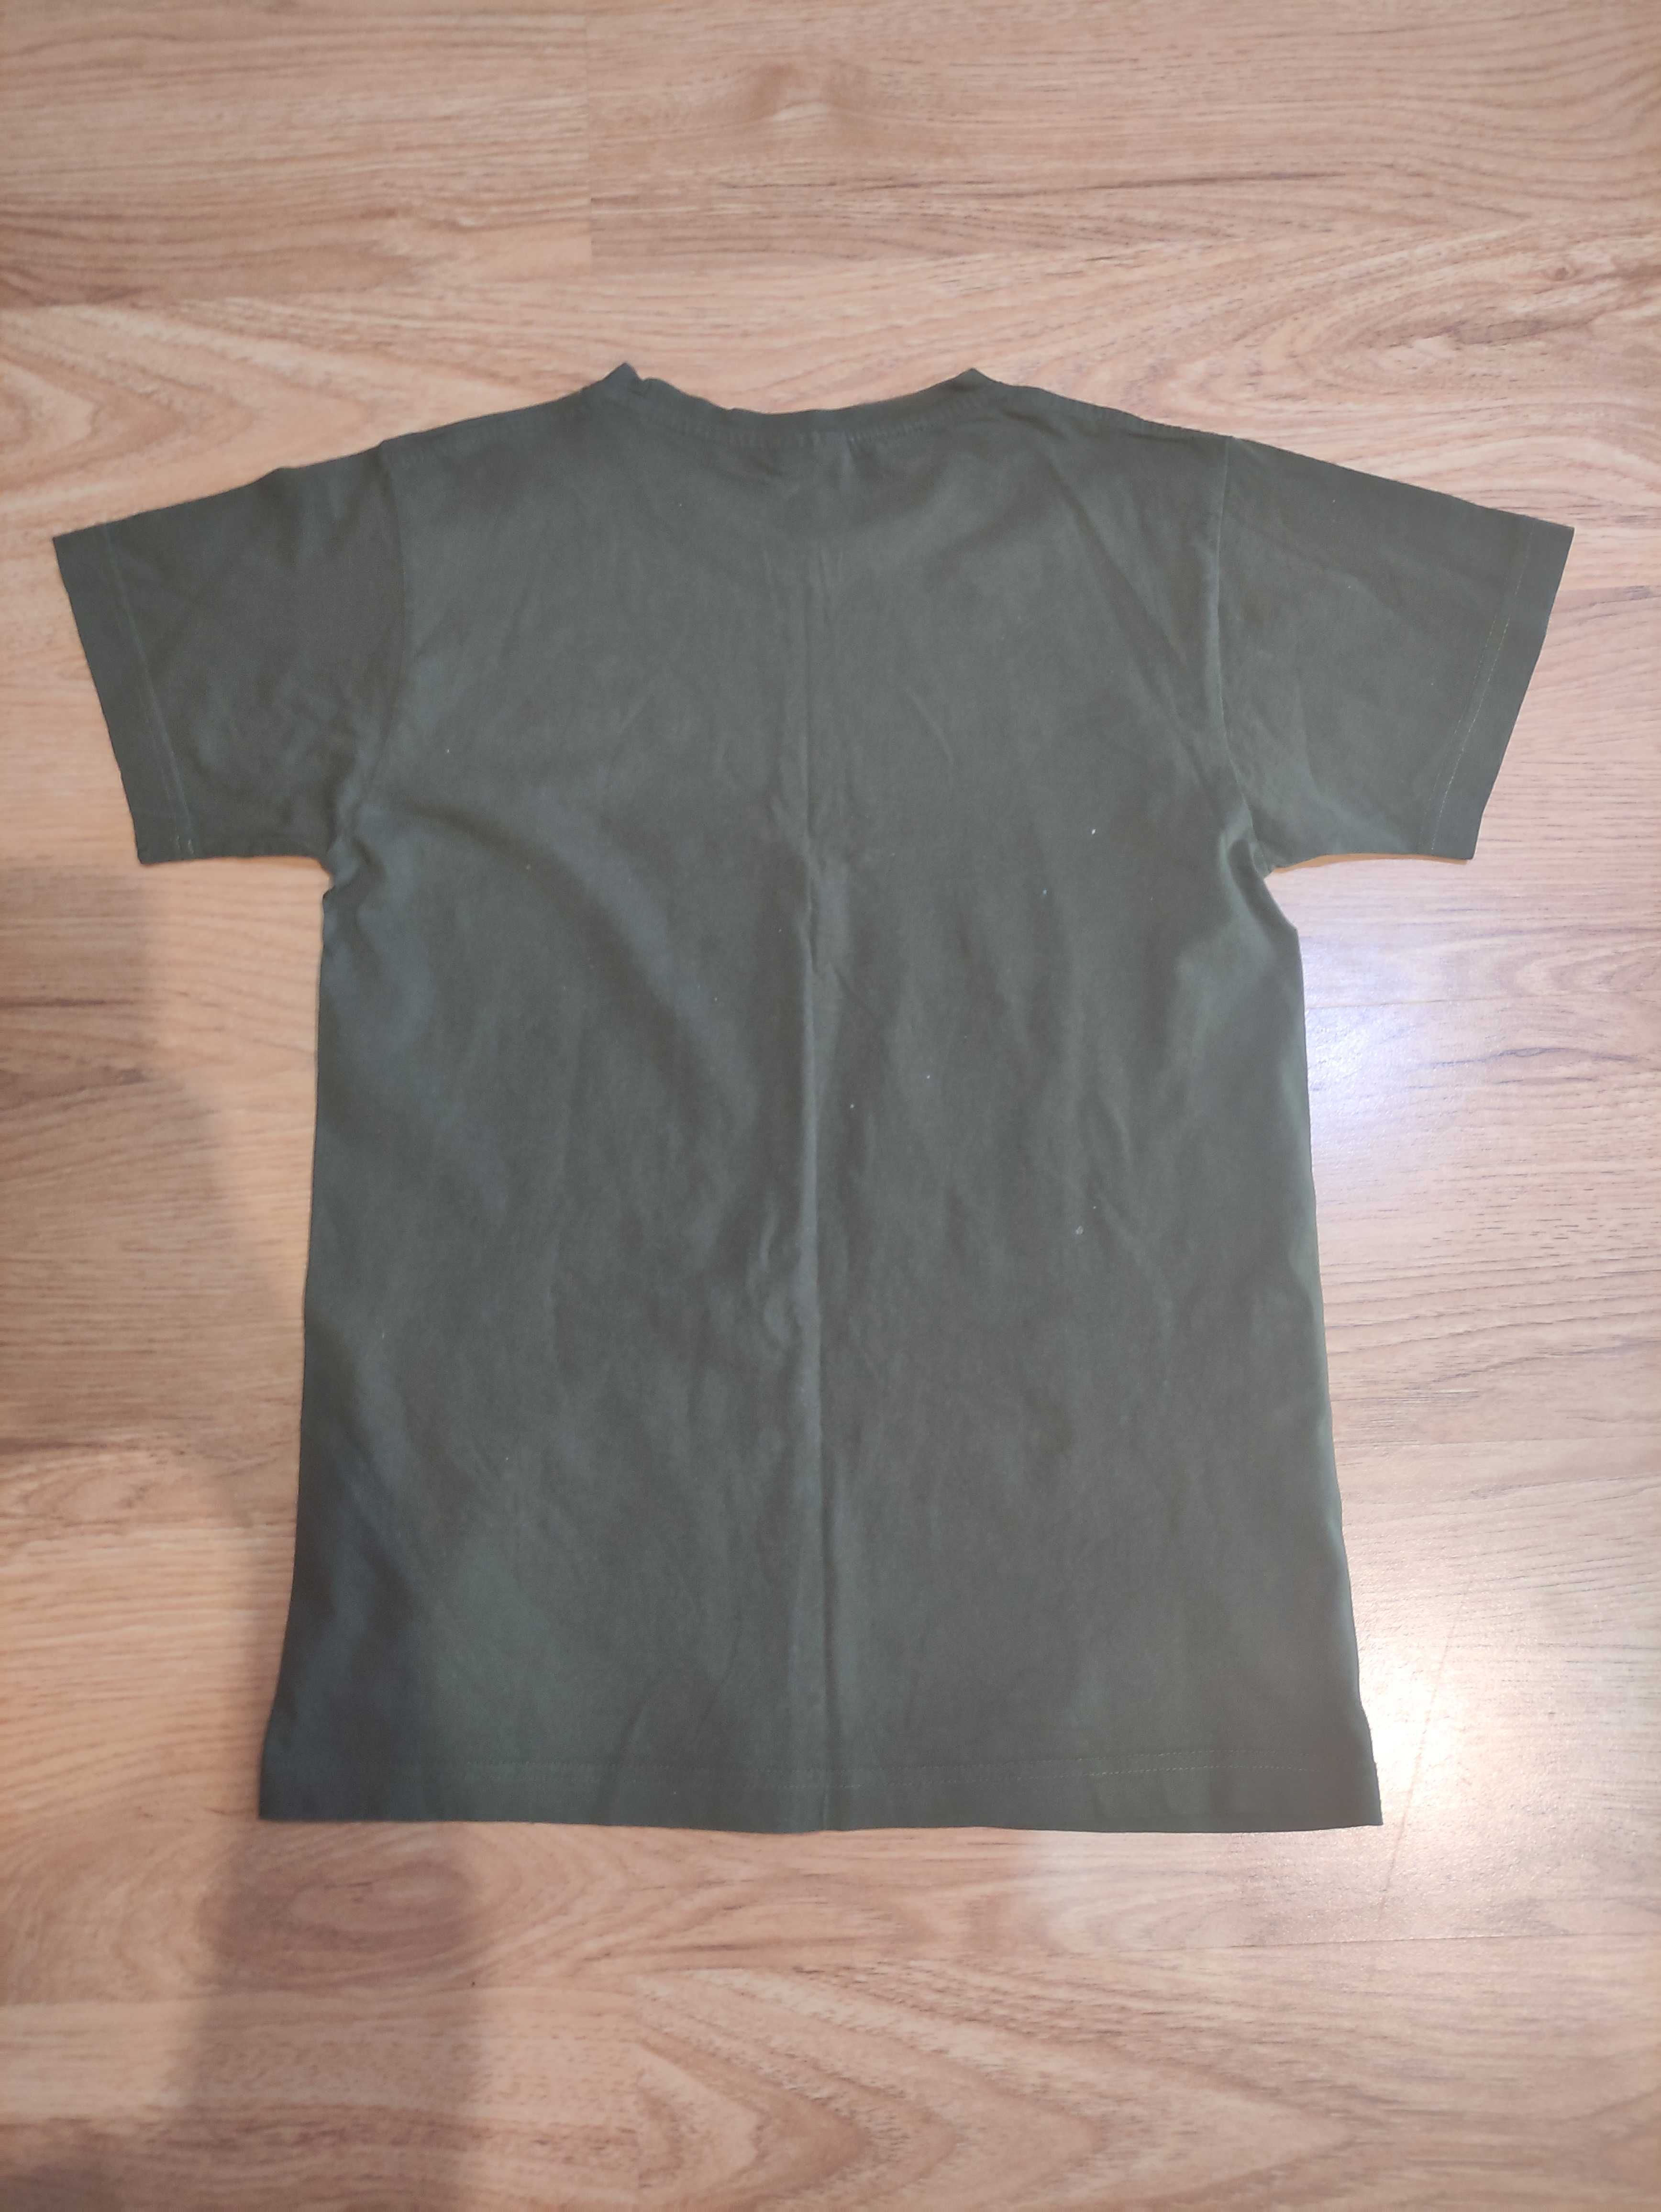 Koszulka khaki ciemny, koszulka wojskowa r.S bdb stan.